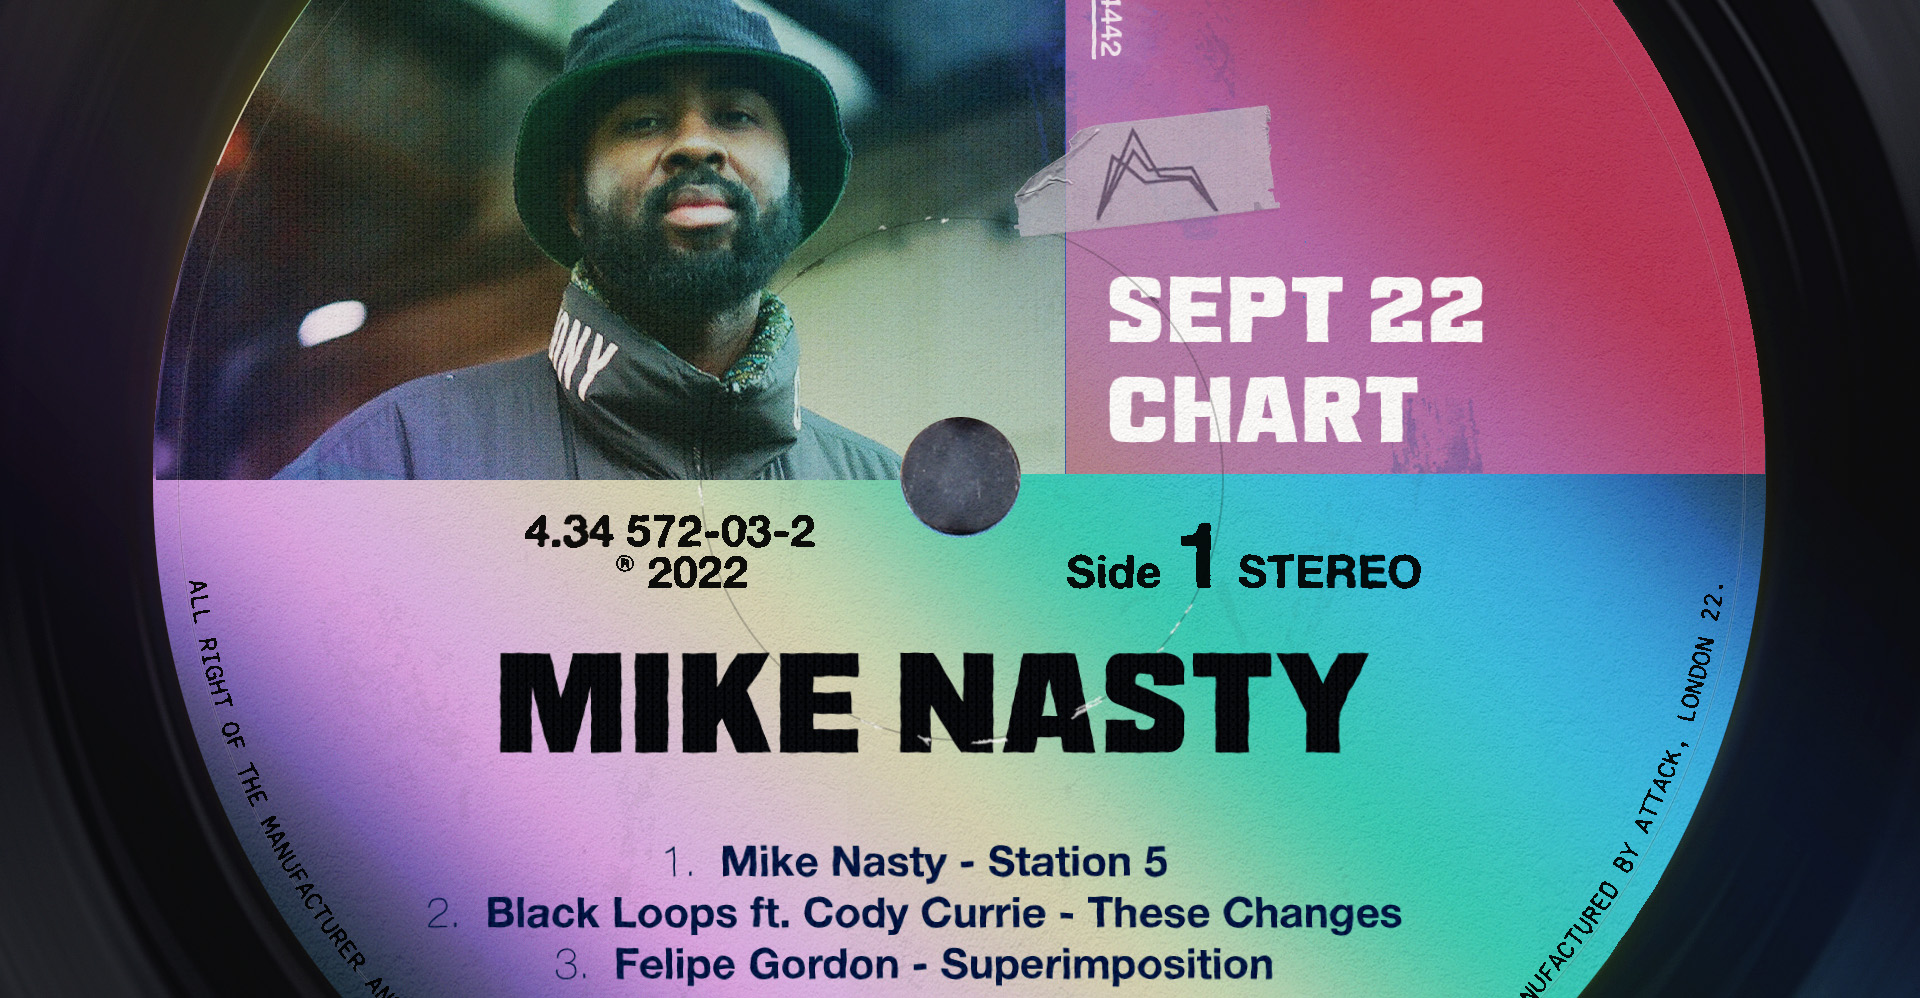 Mike Nasty Sept 22 Chart